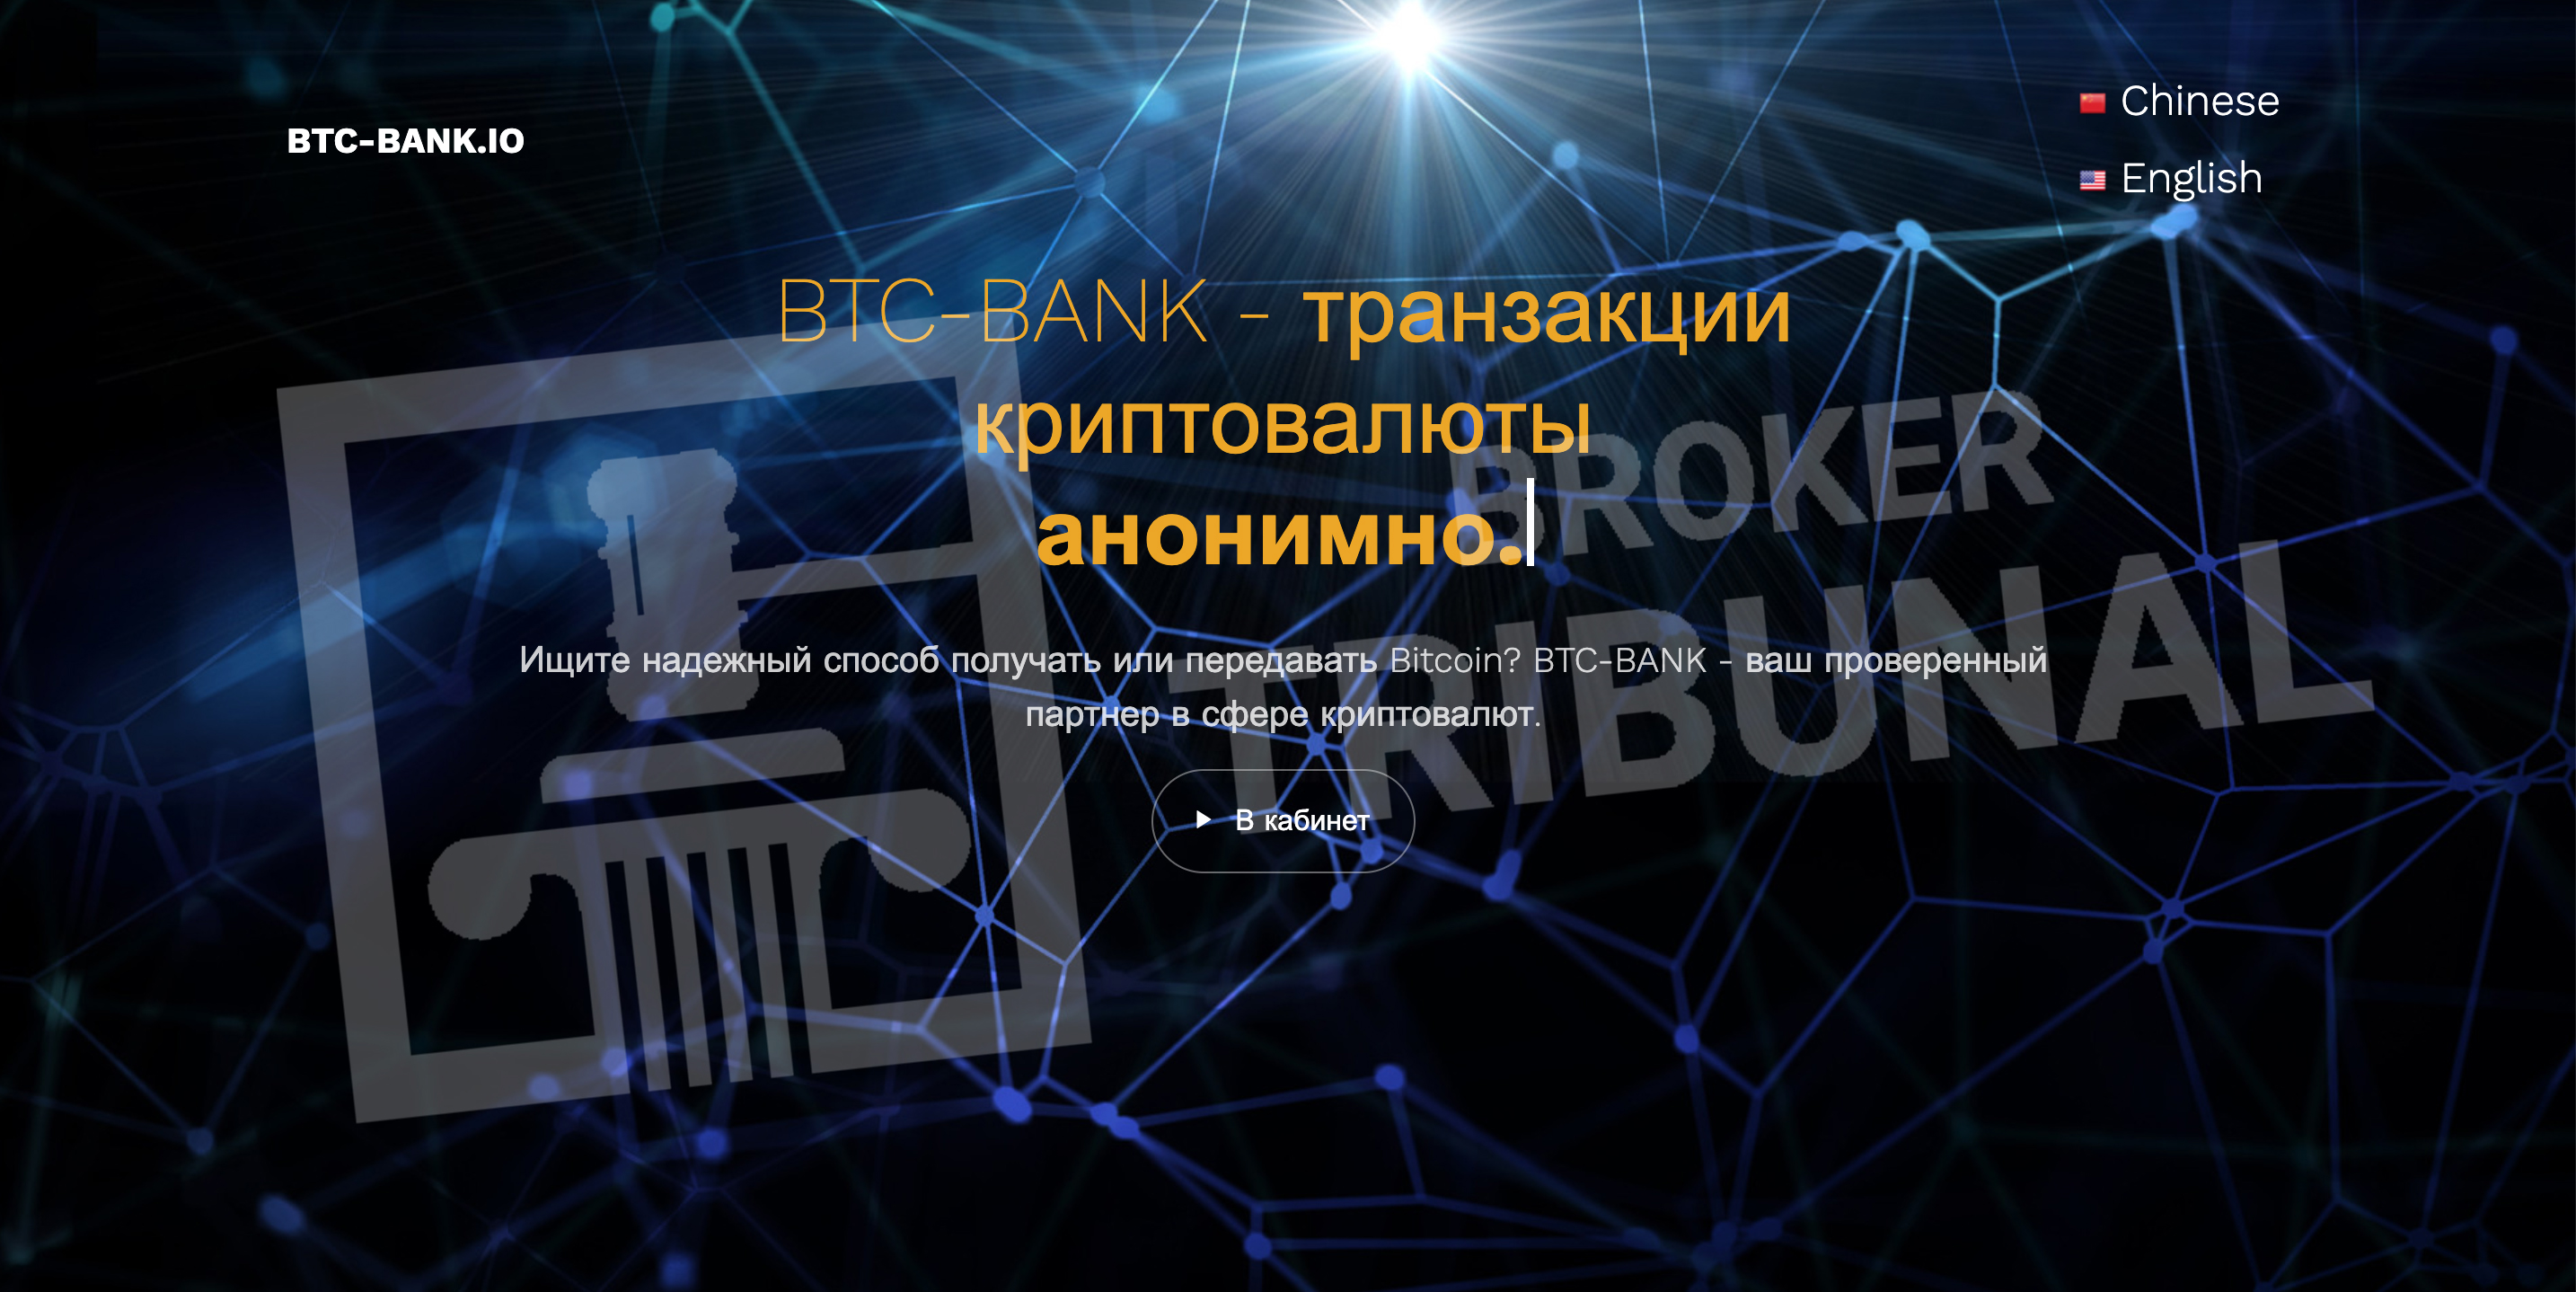 btc-bank01.jpg